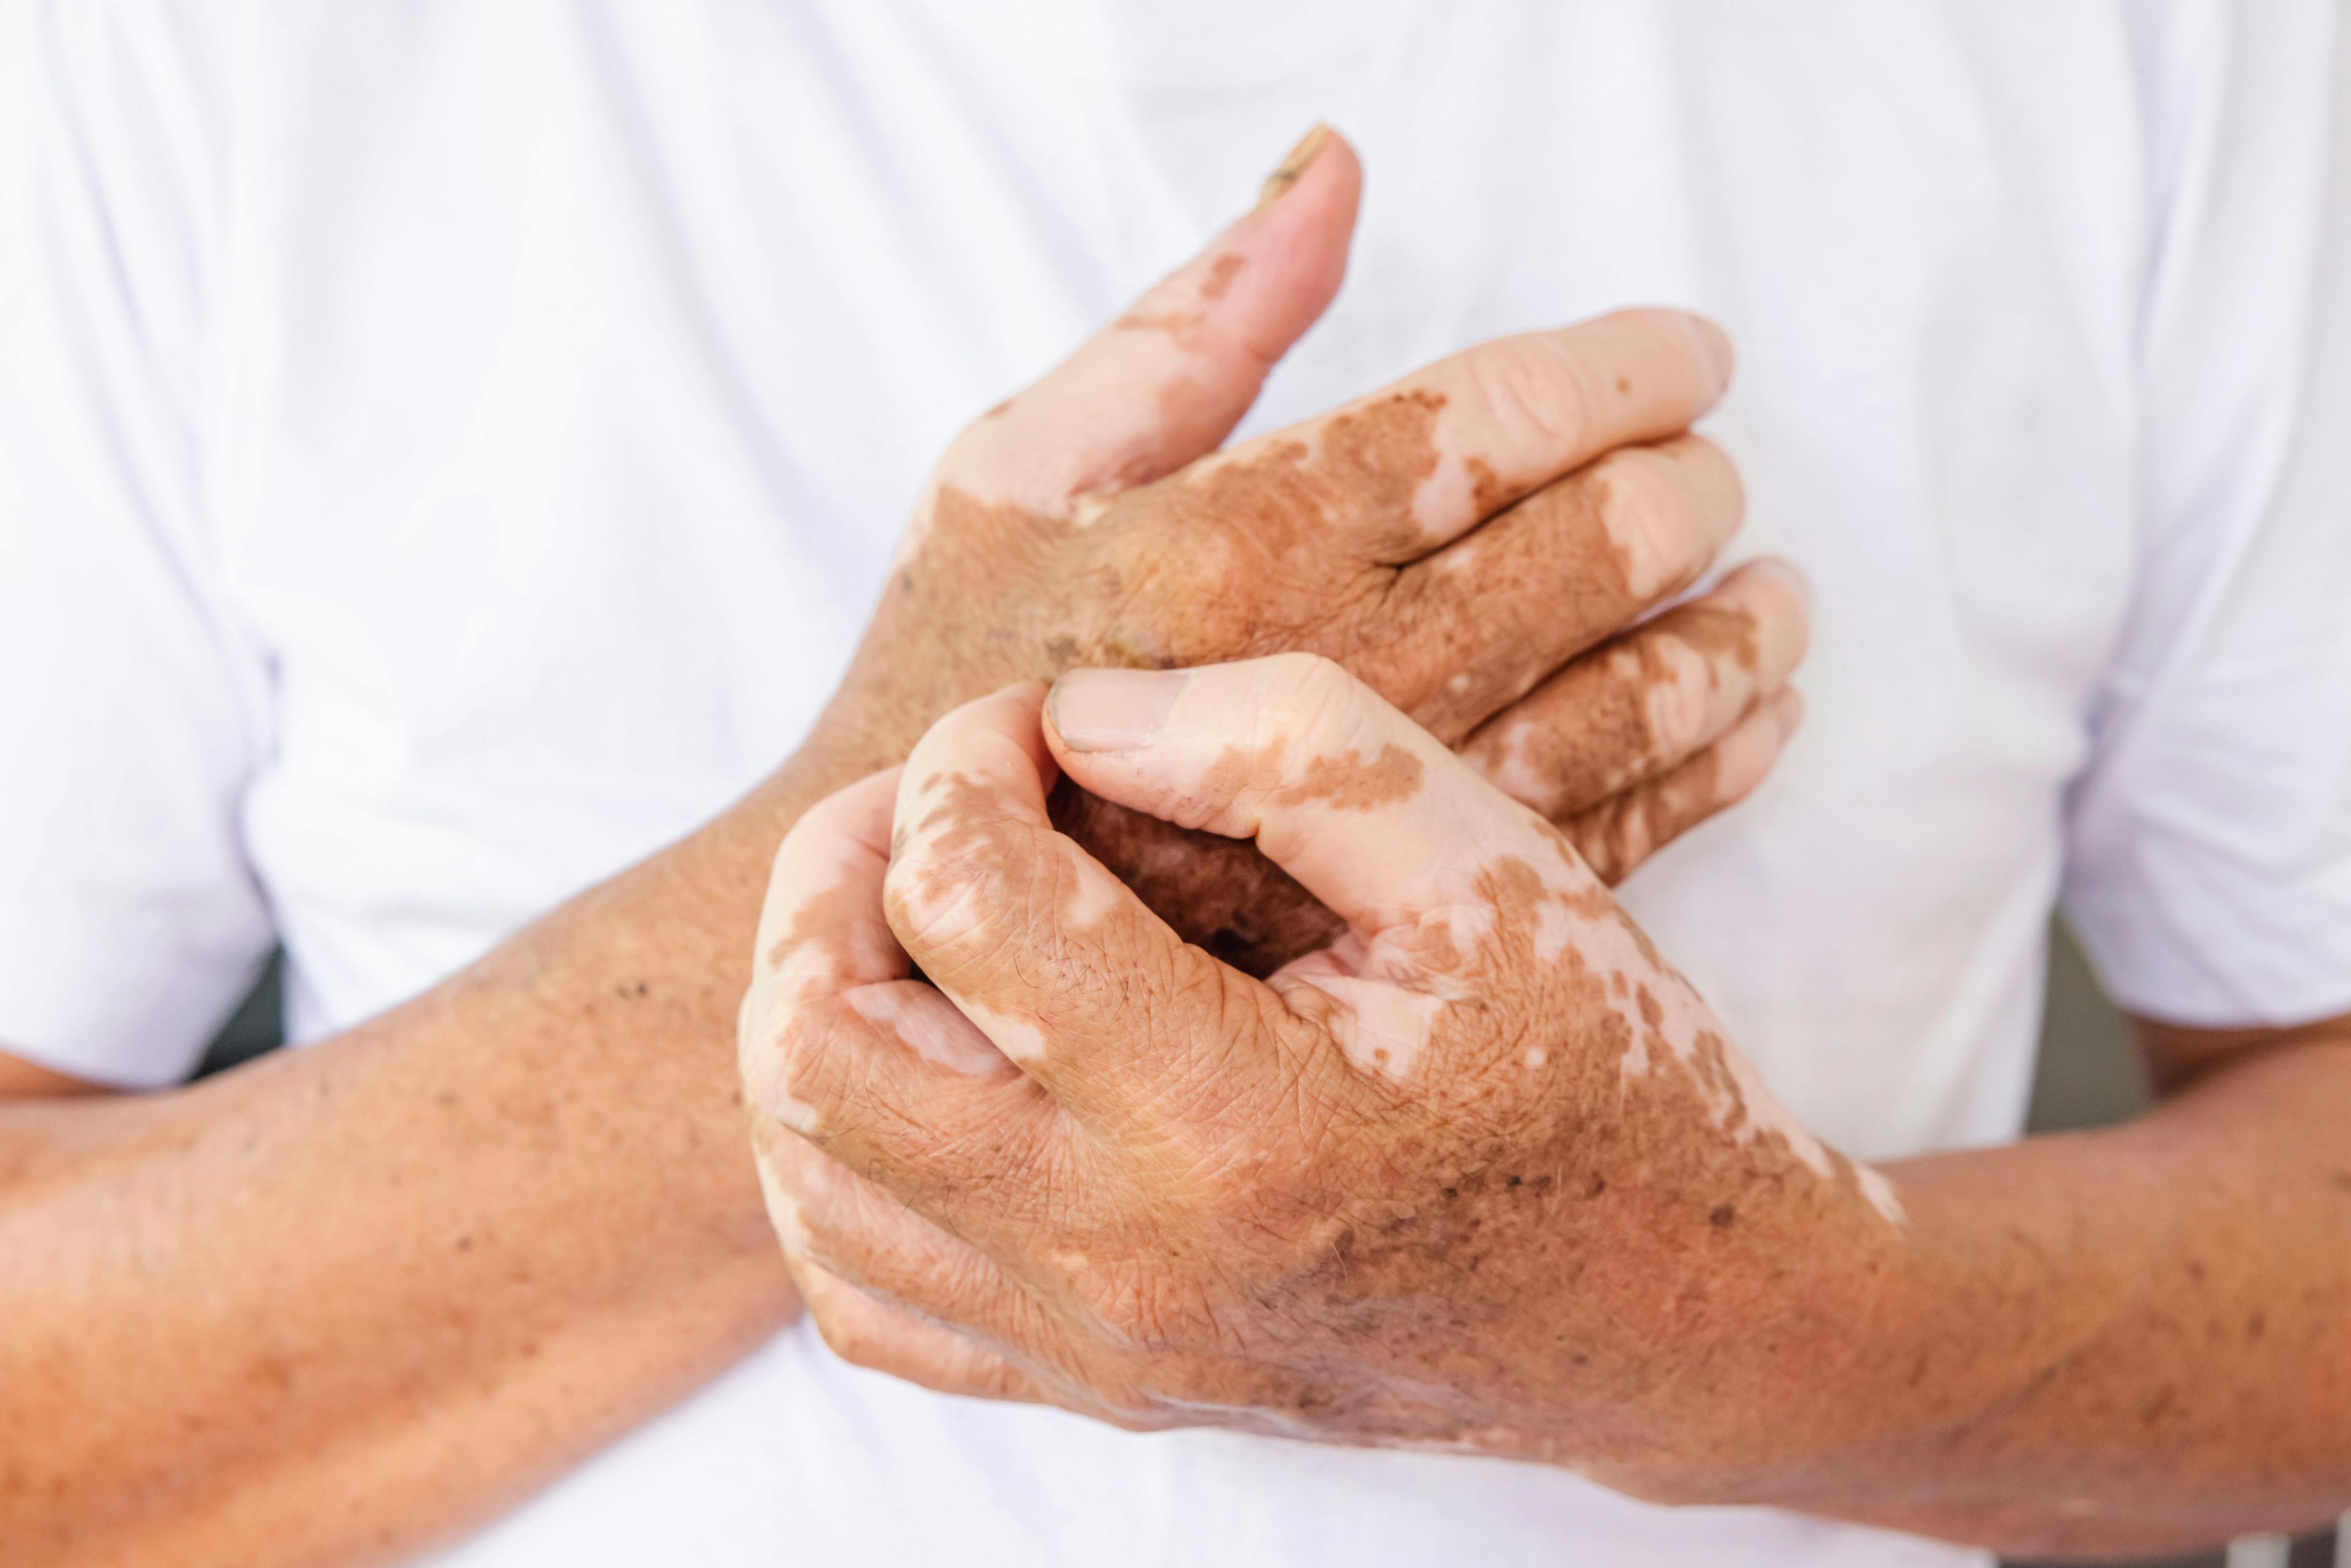 Vitiligo Leads to Heightened Risk of Rheumatoid Arthritis and Systemic Lupus Erythematosus, According to Mendelian Randomization